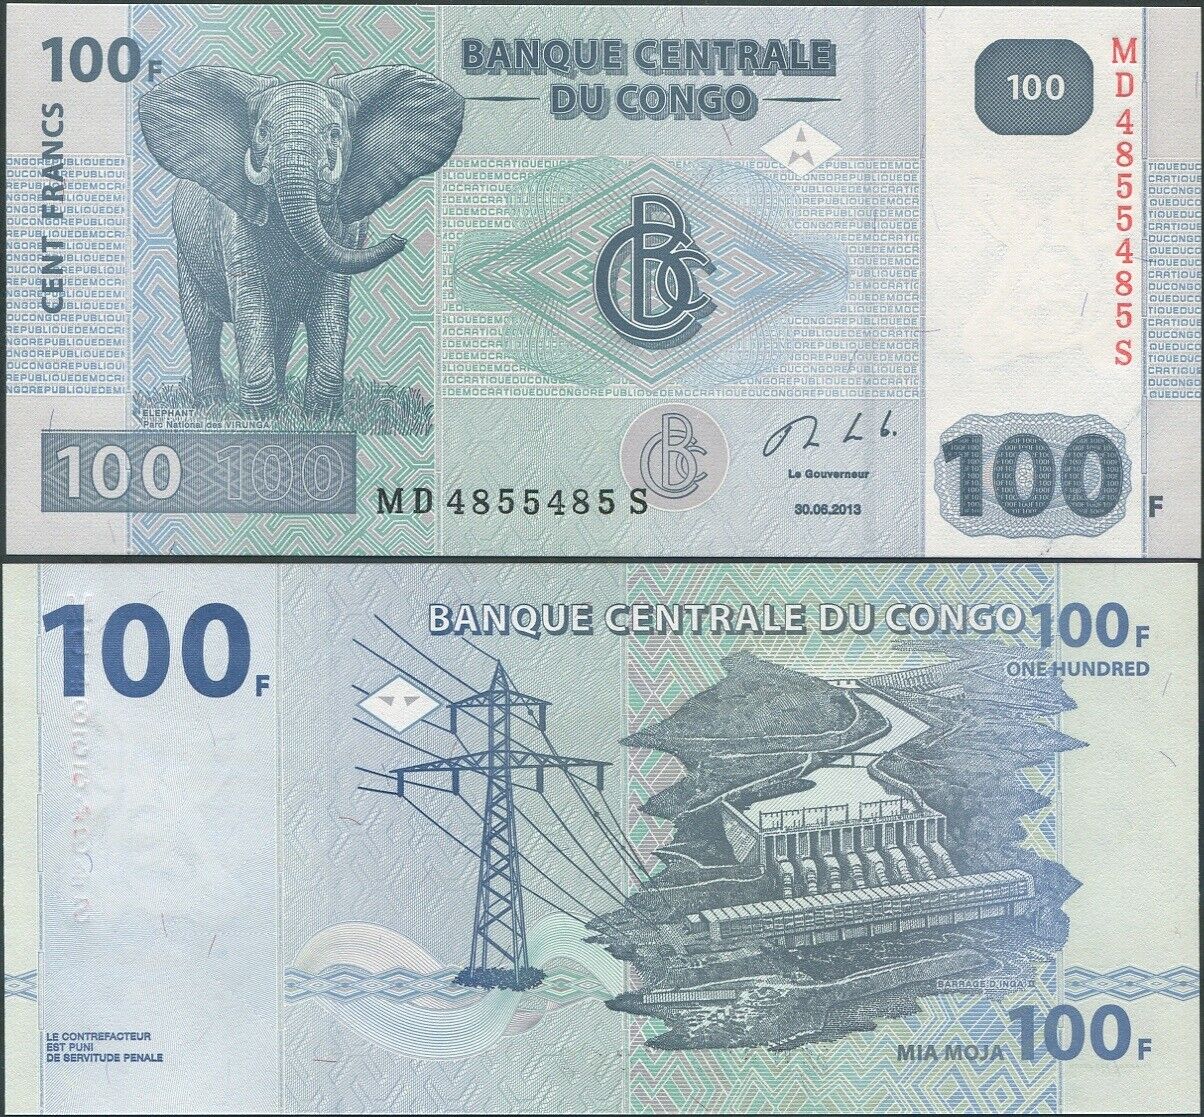 DR Congo 100 Francs 2013 UNC, P-98b